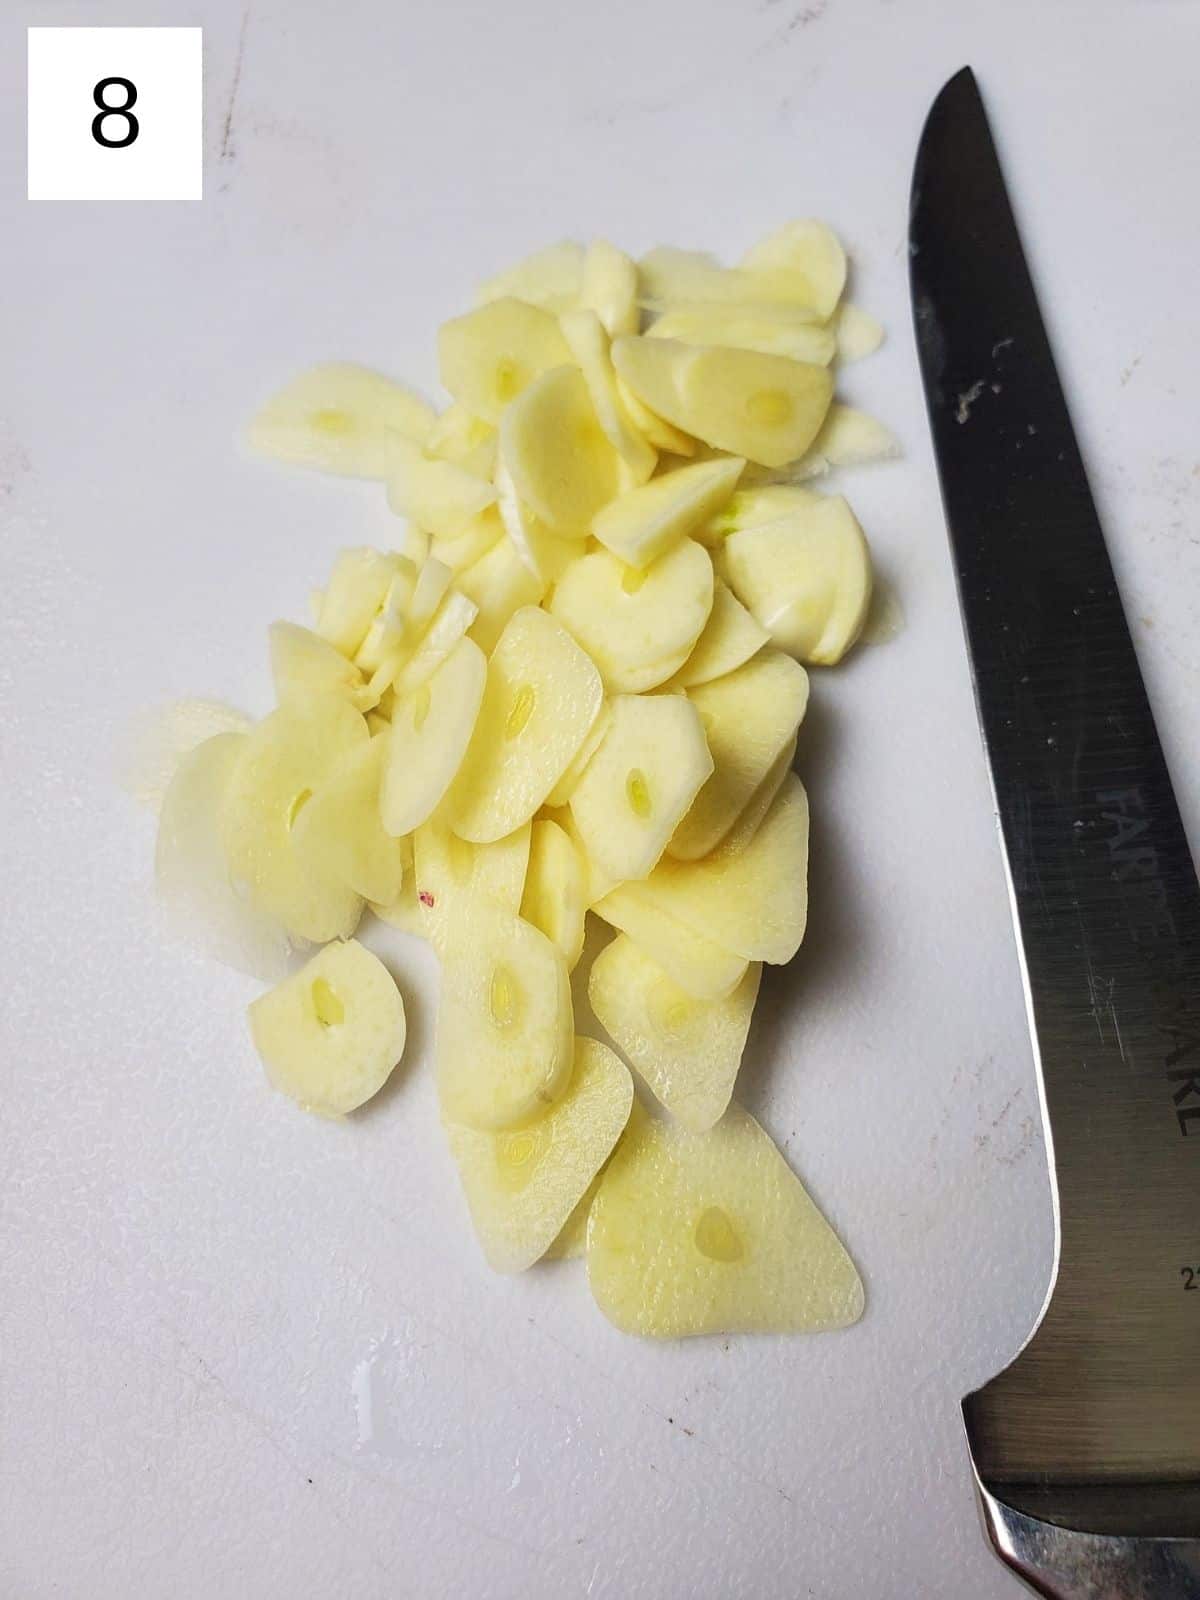 chopped garlic on a white chopping board.